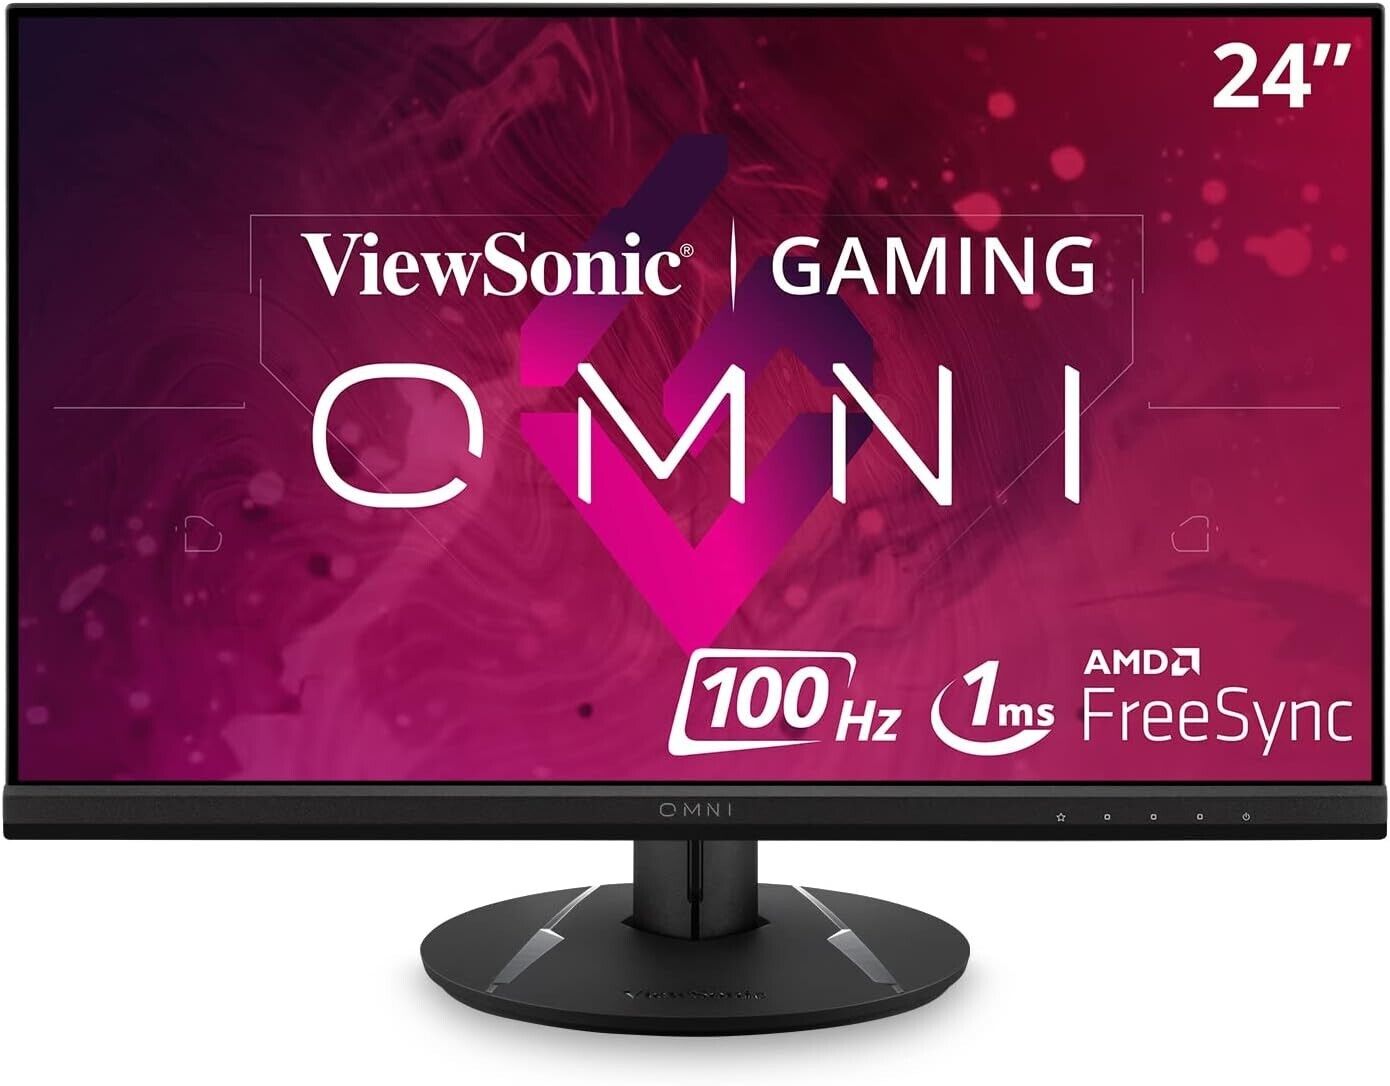 ViewSonic Omni VX2416 - New - Never Used